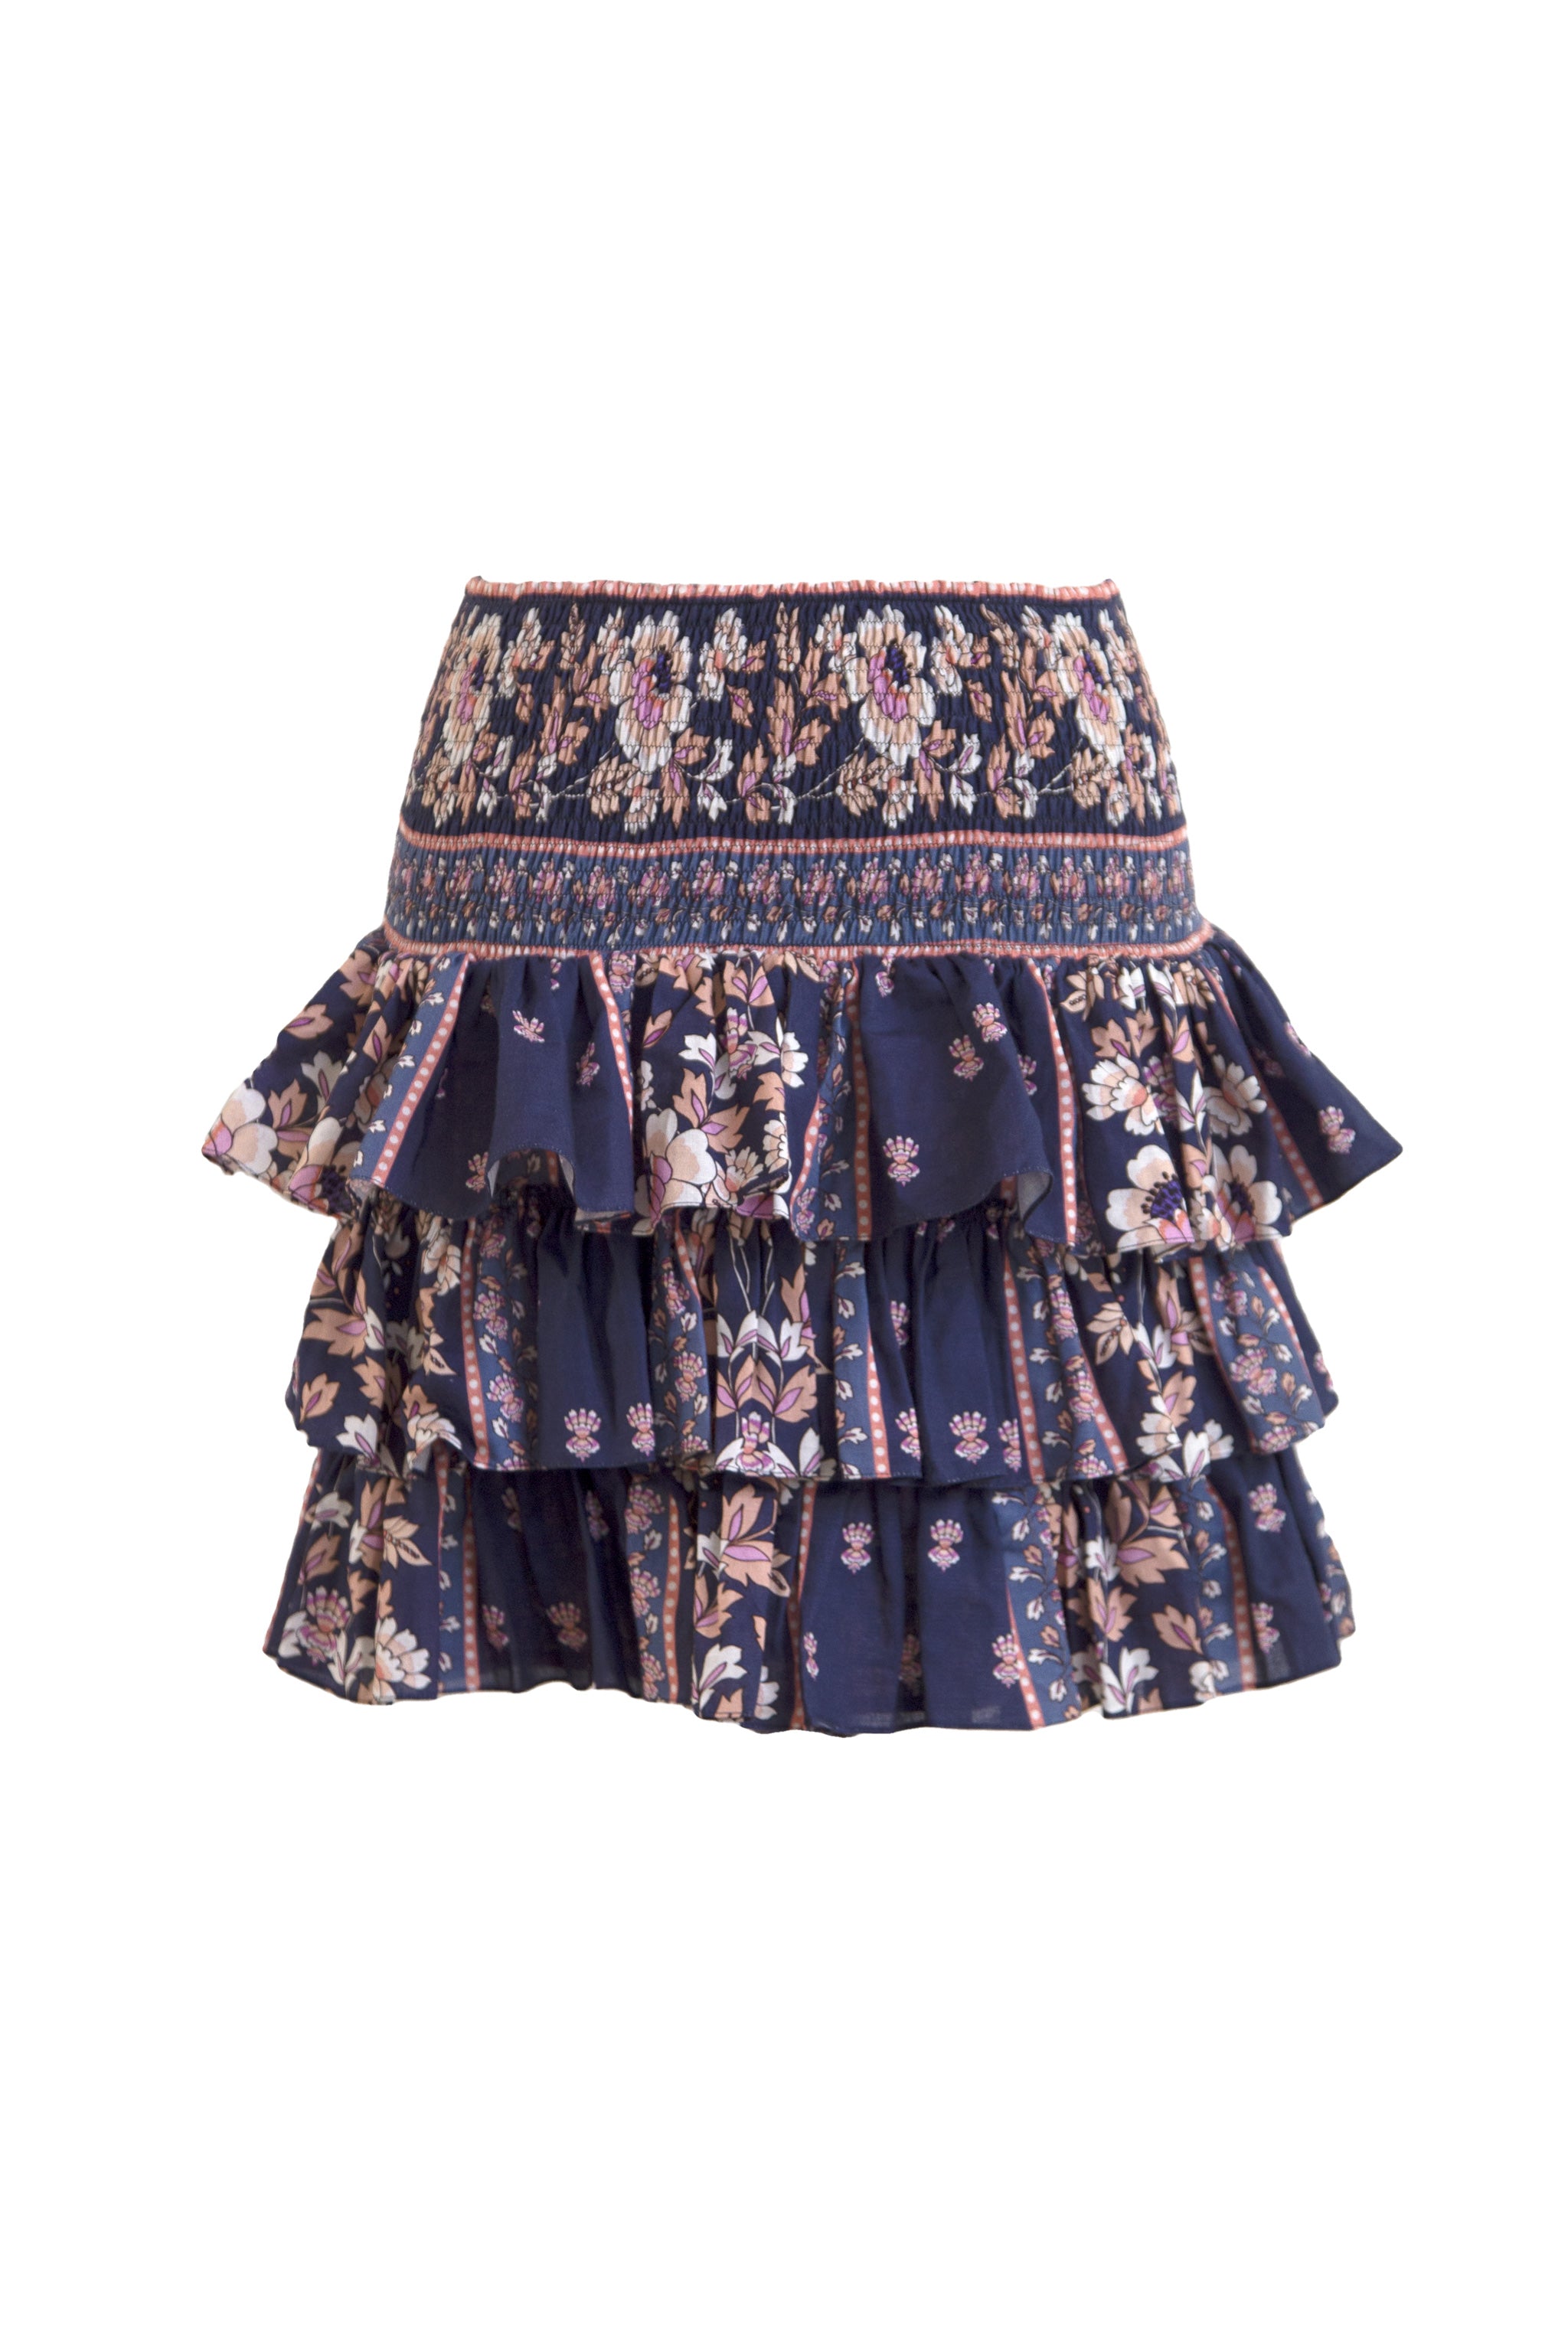 Tallulah Navy Scallop Skirt